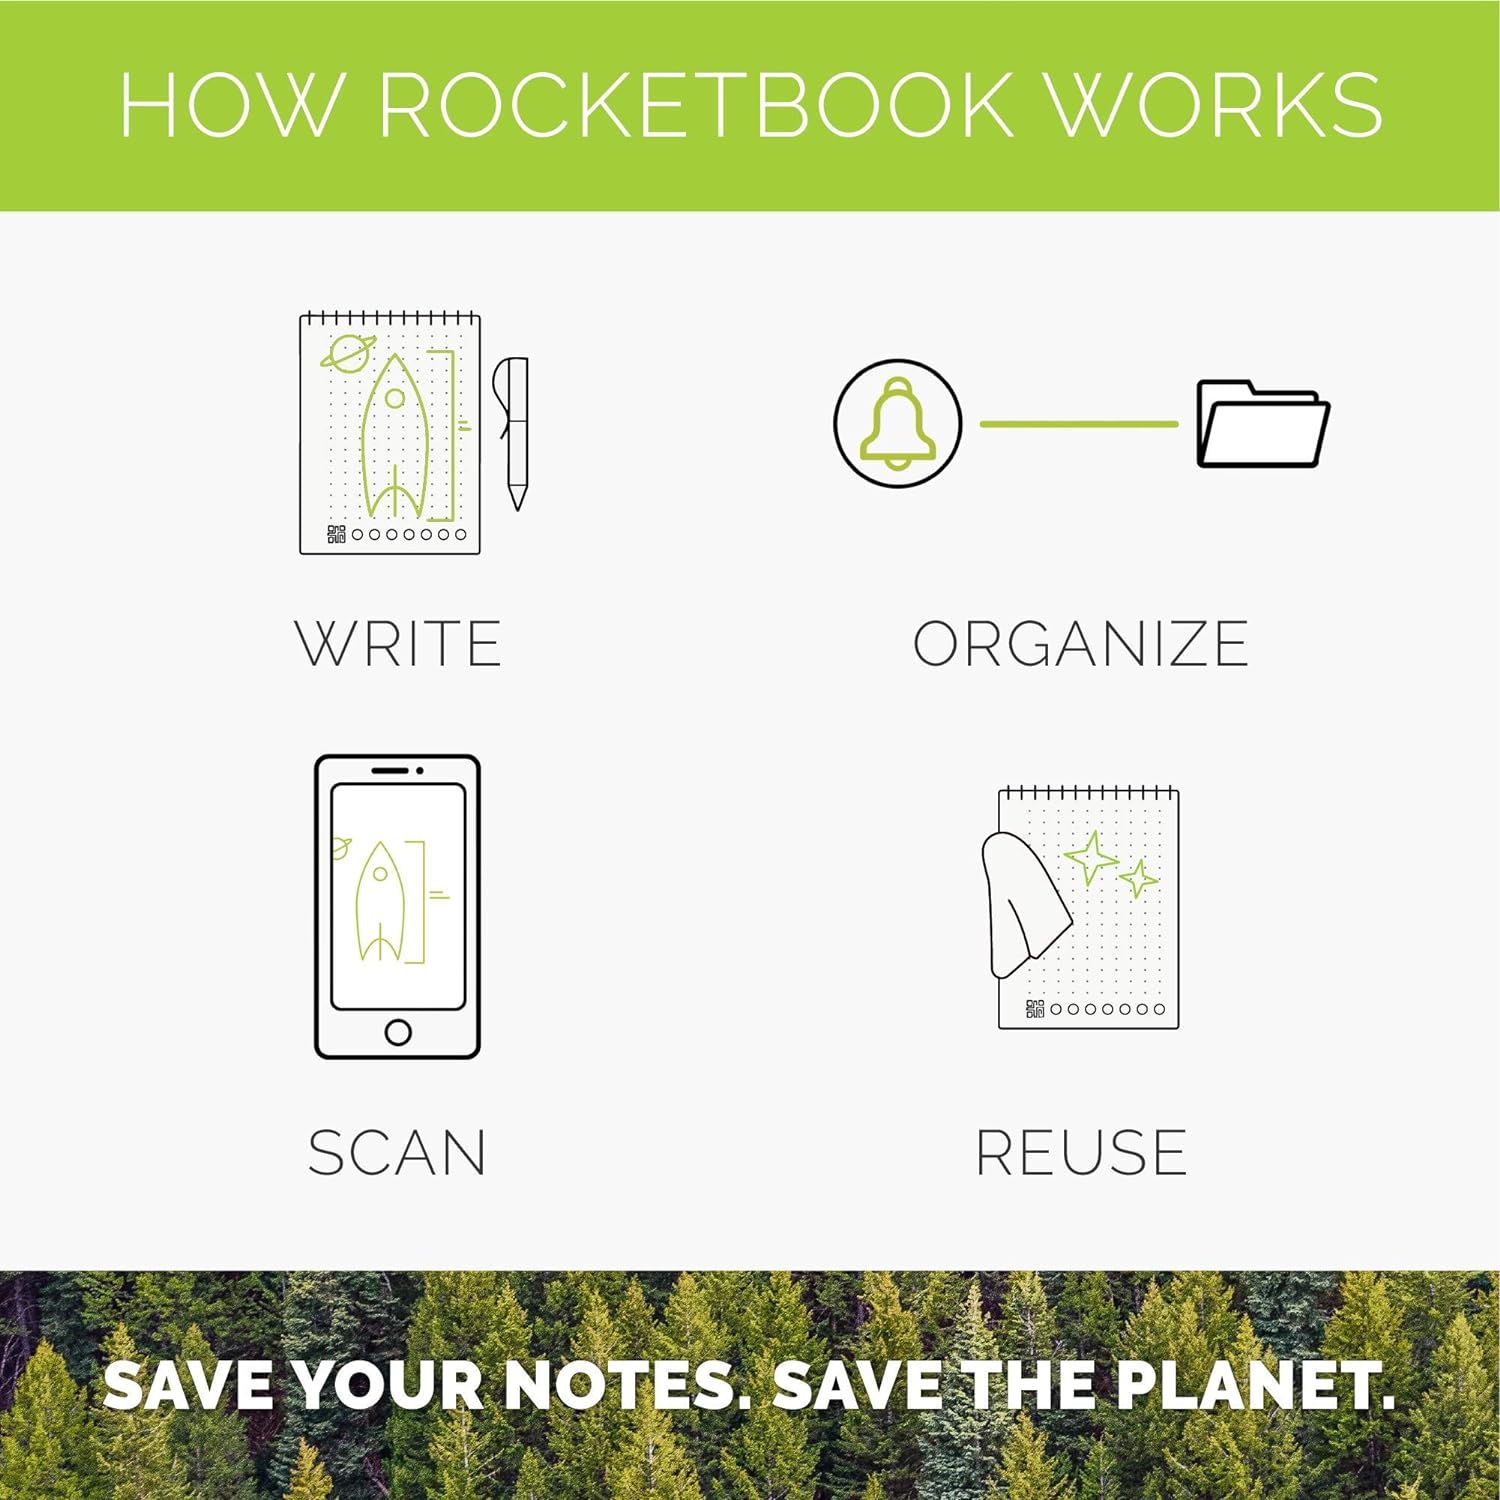 Rocketbook Orbit Legal Pad Letter - Smart Reusable Legal Pad - Gray, Lined\\/Dot-Grid